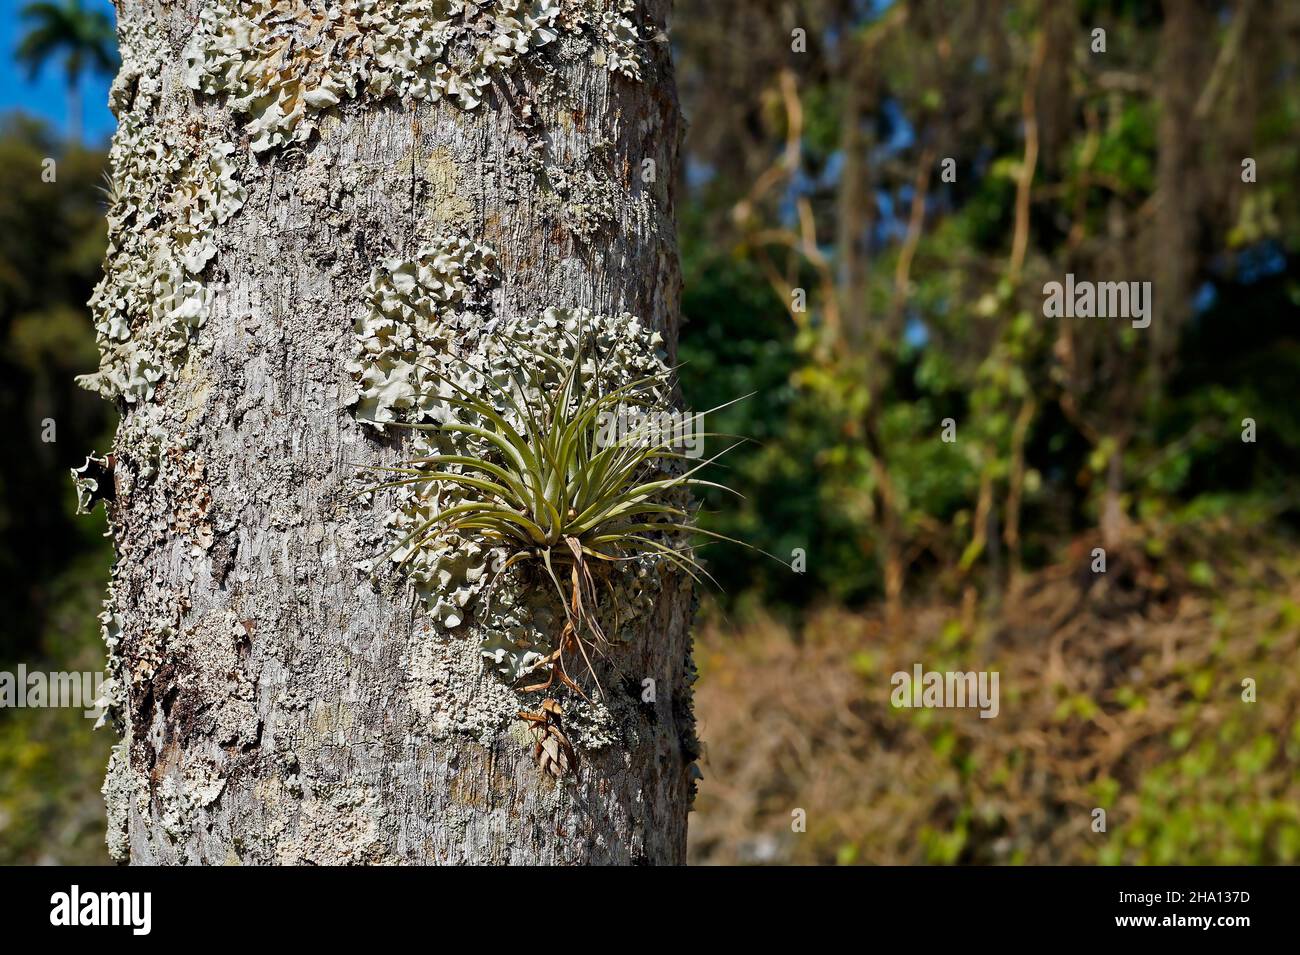 Epiphytic plant on tree trunk (Tillandsia stricta) Stock Photo